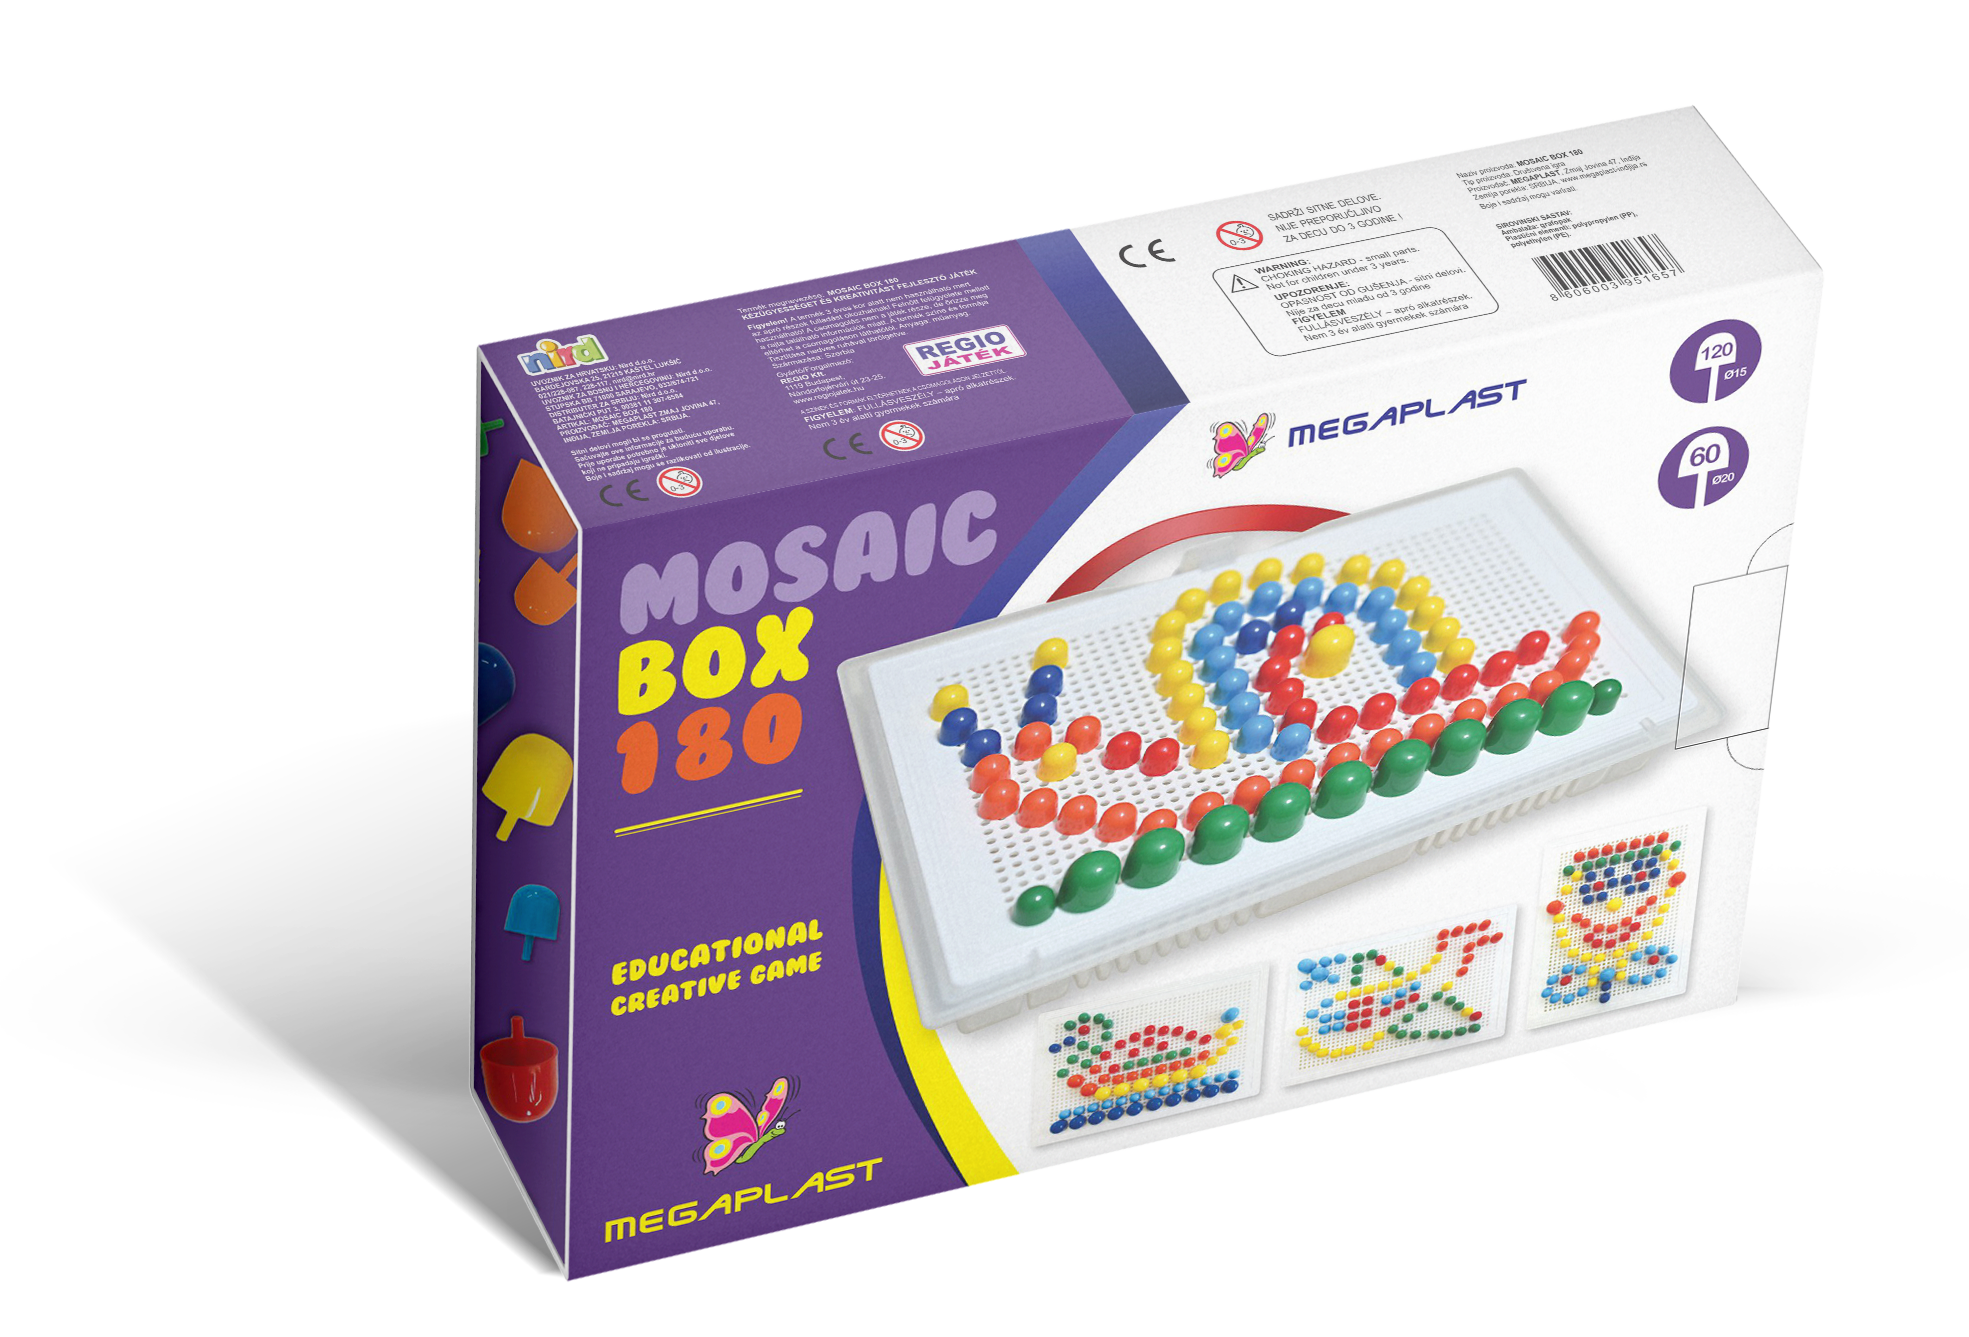 Mosaic box_180